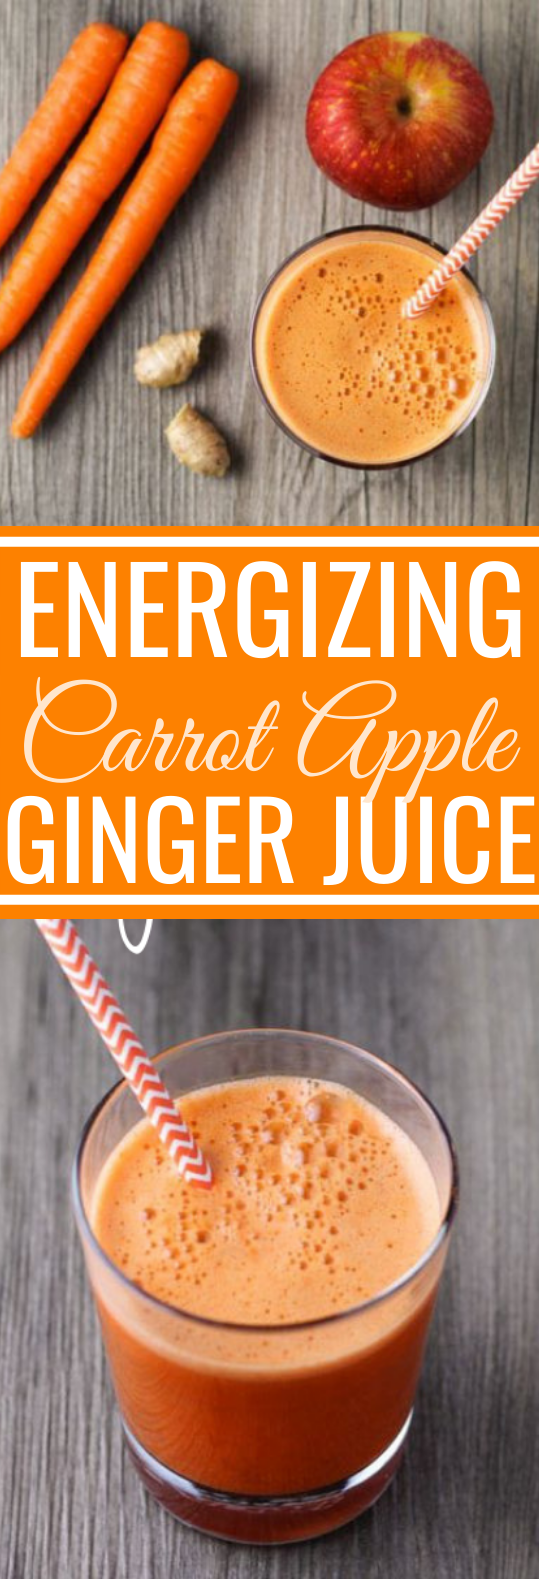 Energizing Carrot, Apple, Ginger Juice #drinks #healthy #juice #smoothie #detox